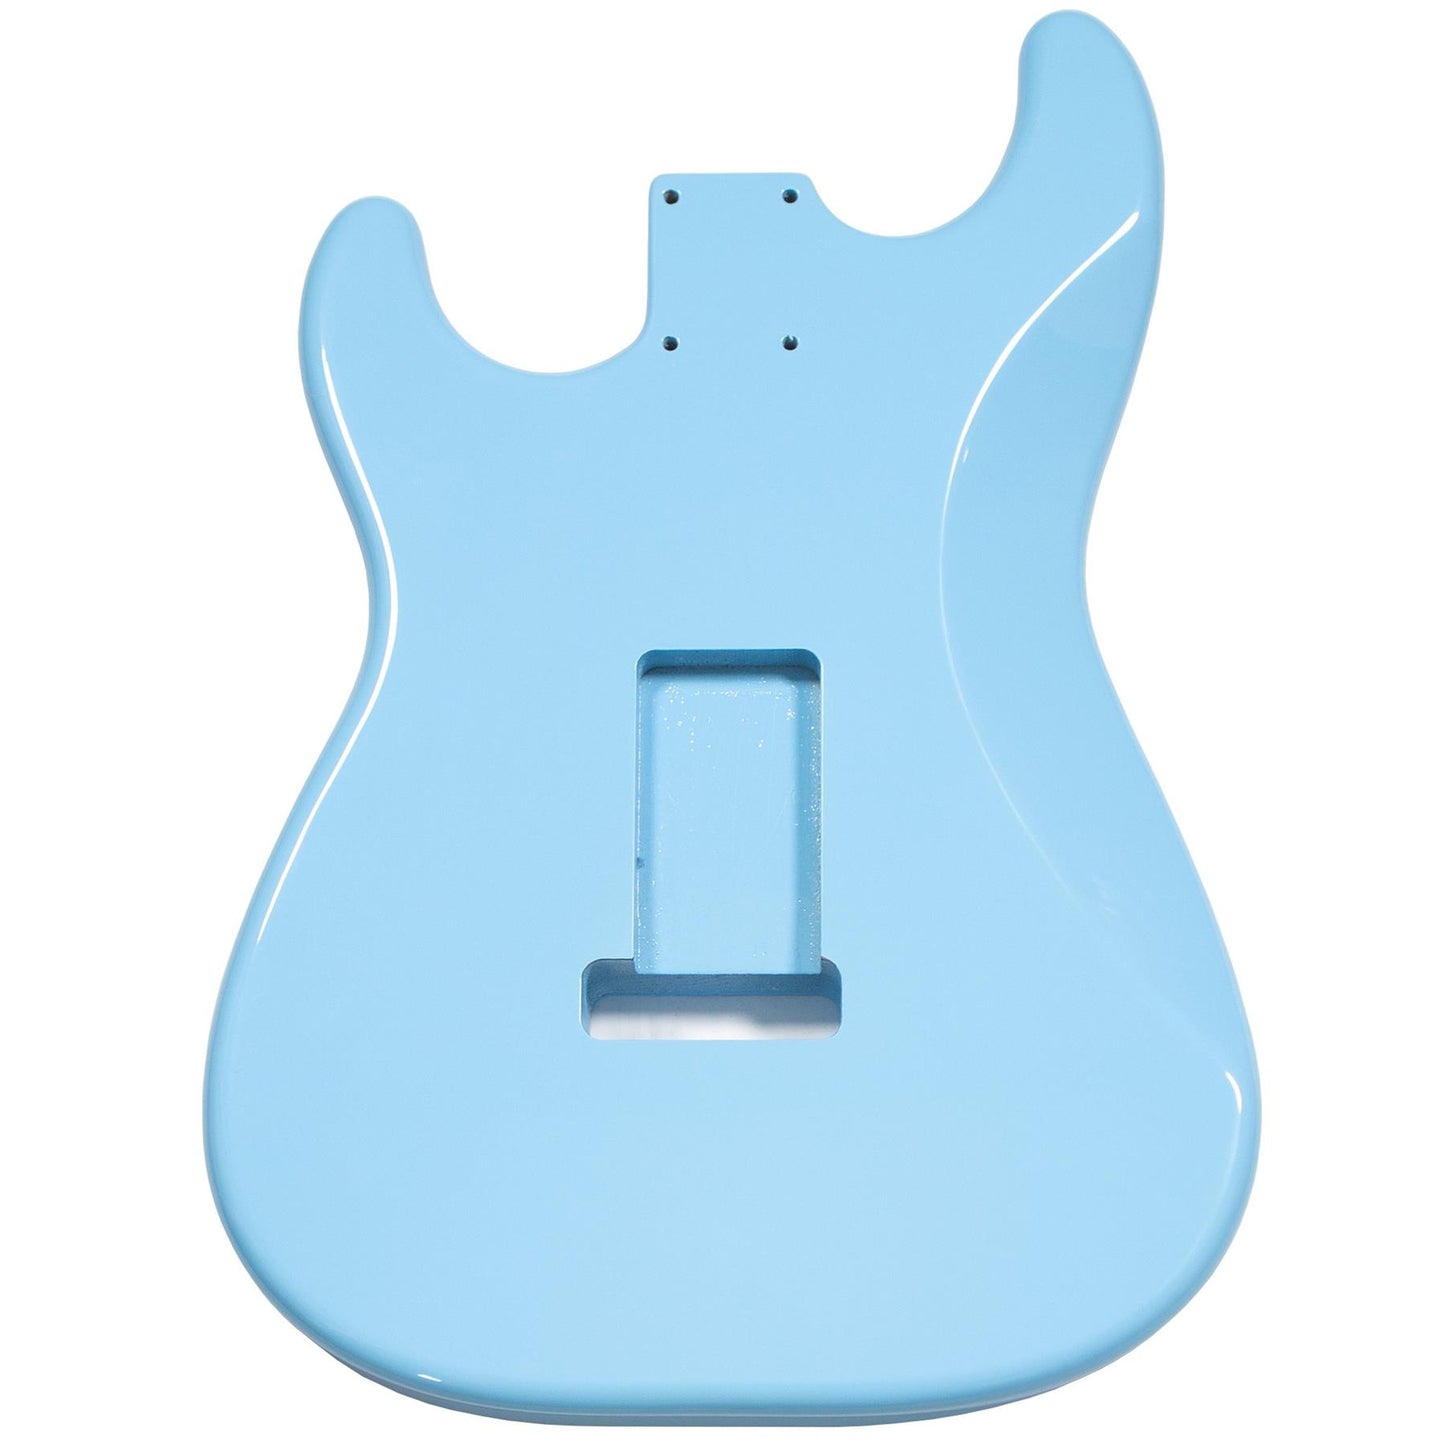 Stratocaster Compatible Body HSS - Daphne Blue